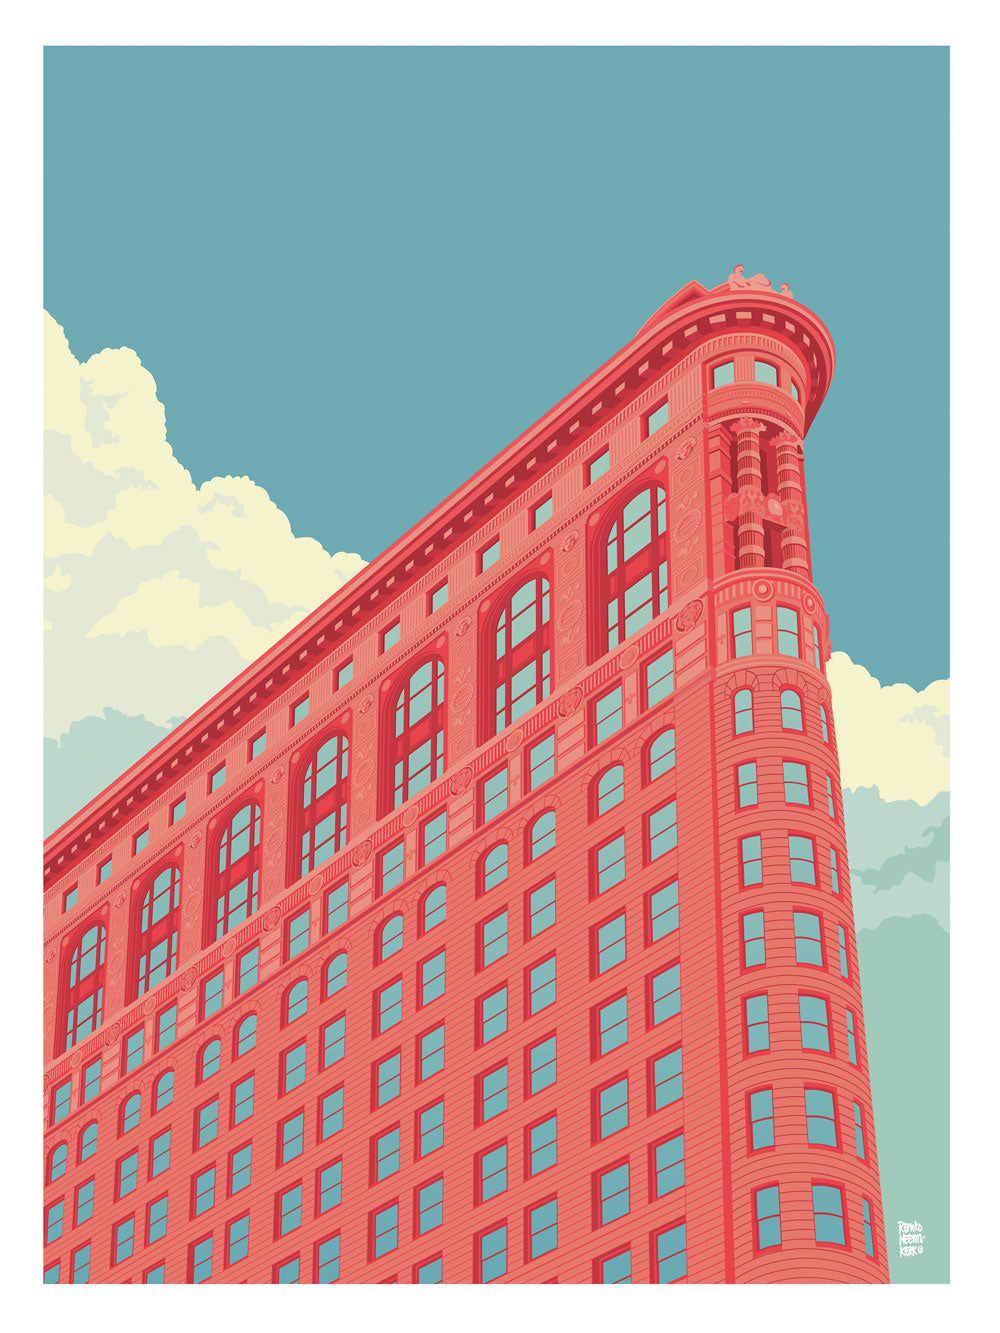 NYC Flatiron Building-print, remko-heemskerk-Print-30 x 40 cm-BLUE SHAKER